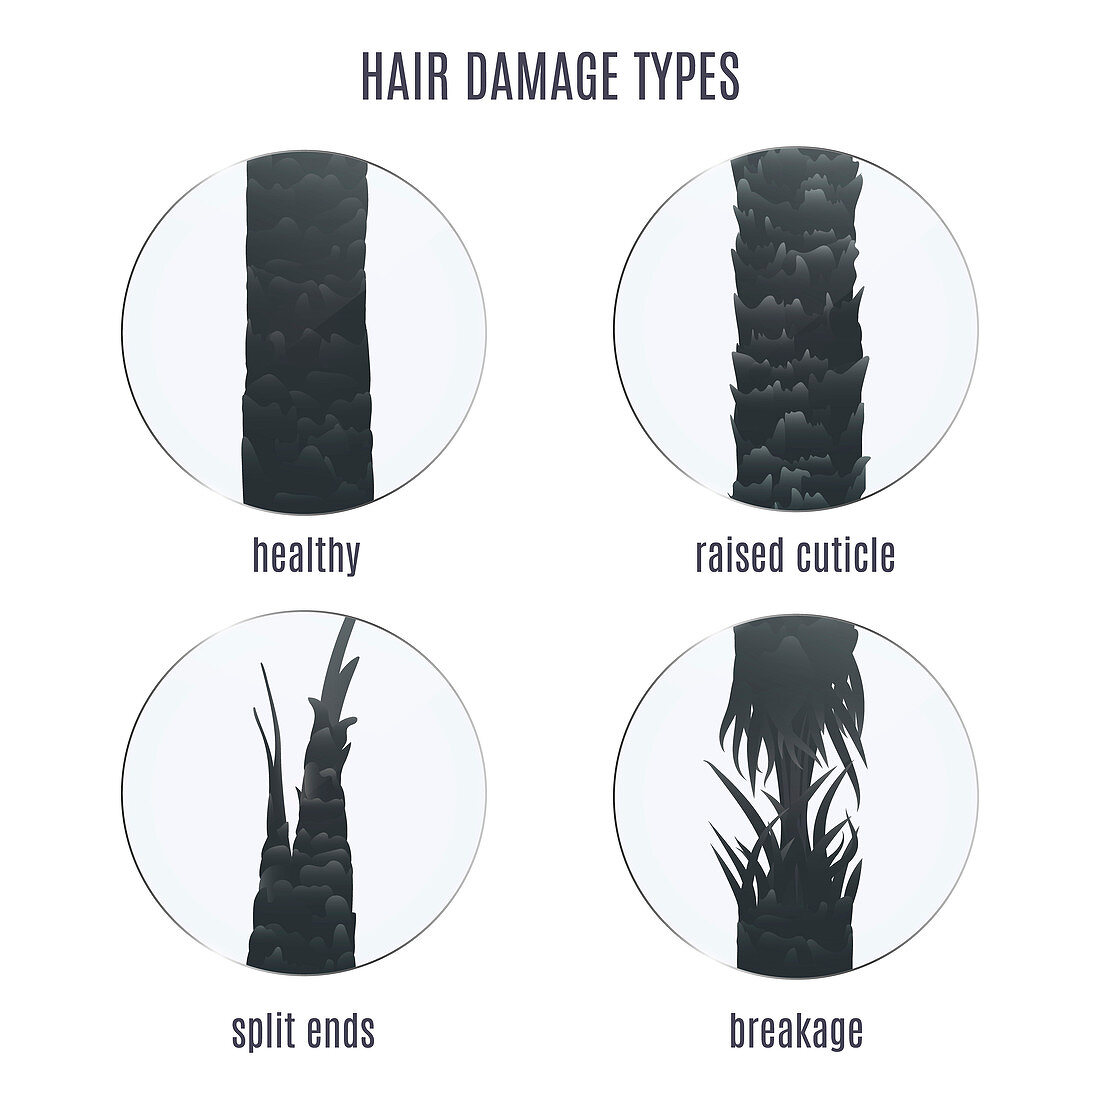 Hair damage types, illustration